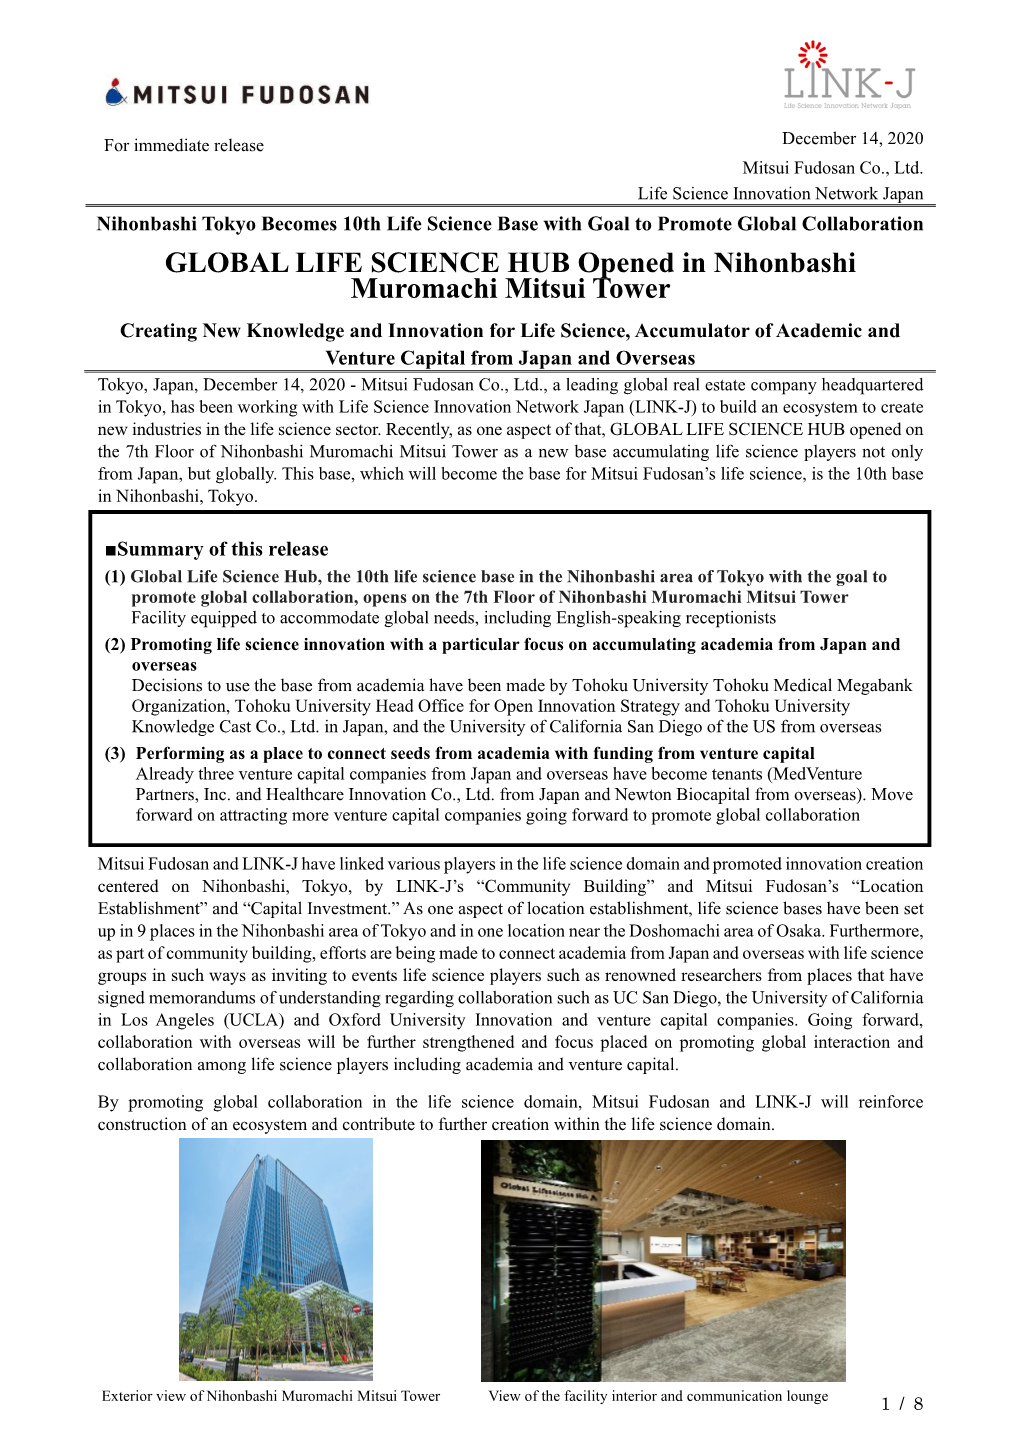 GLOBAL LIFE SCIENCE HUB Opened in Nihonbashi Muromachi Mitsui